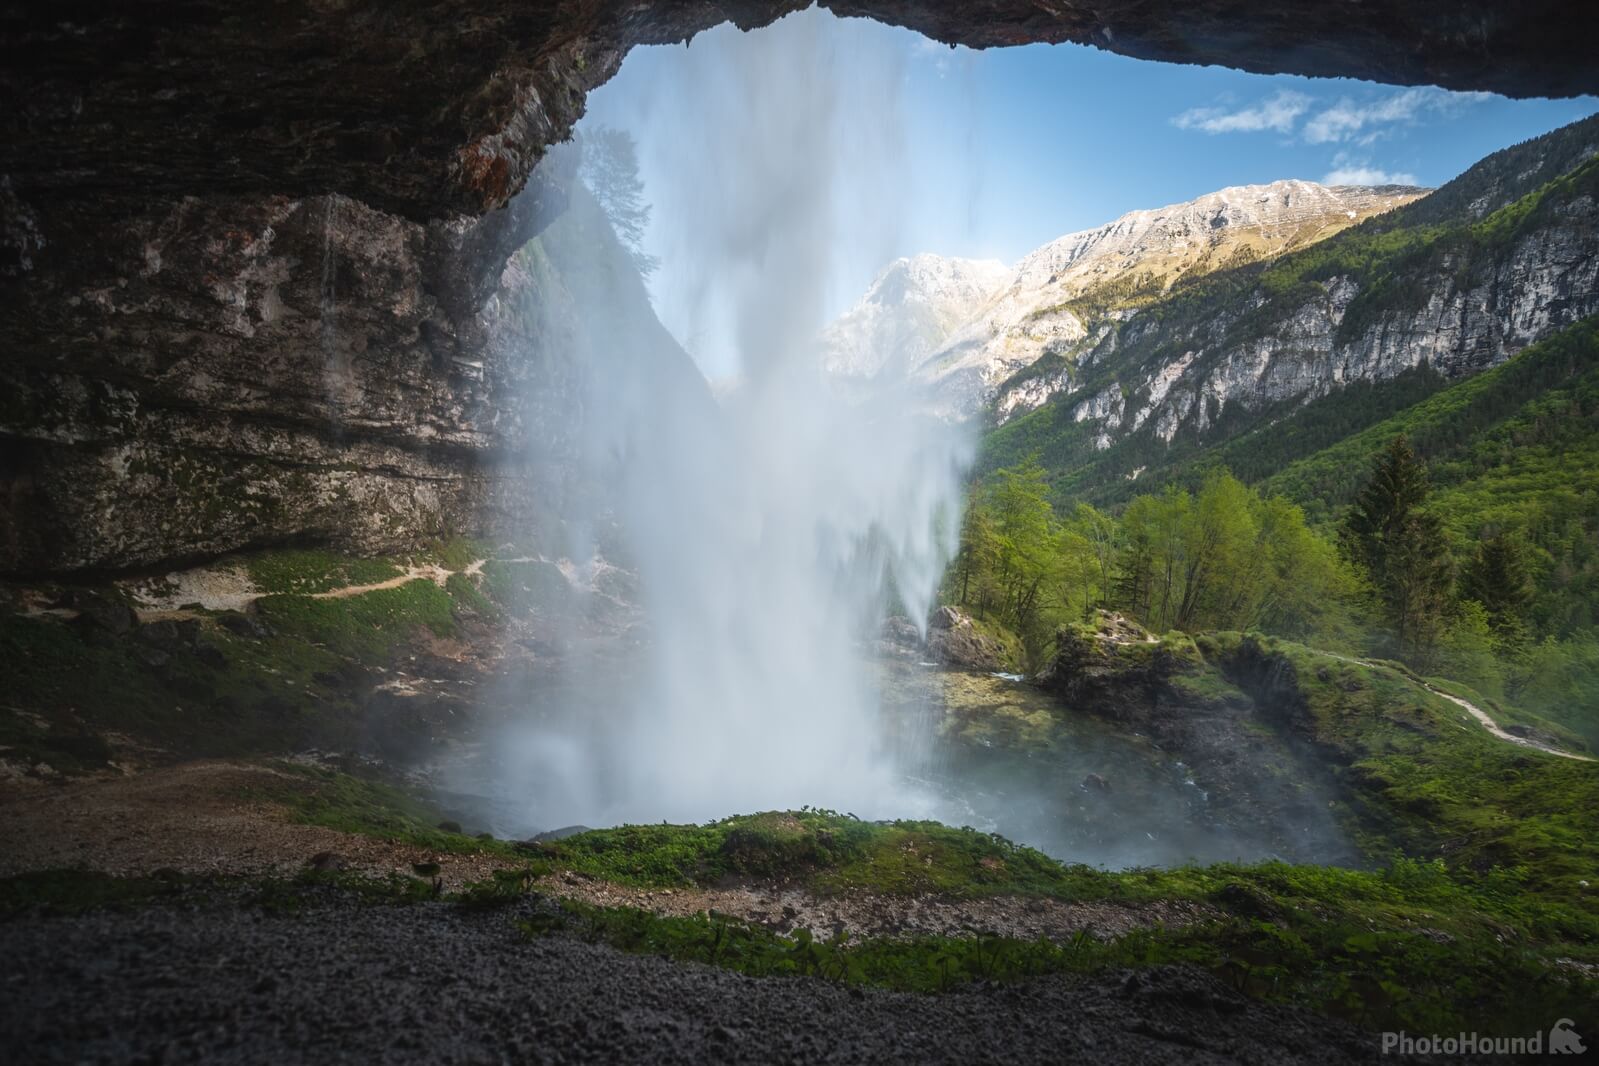 Image of Fontanone Di Goriuda waterfall by Nina Lozej